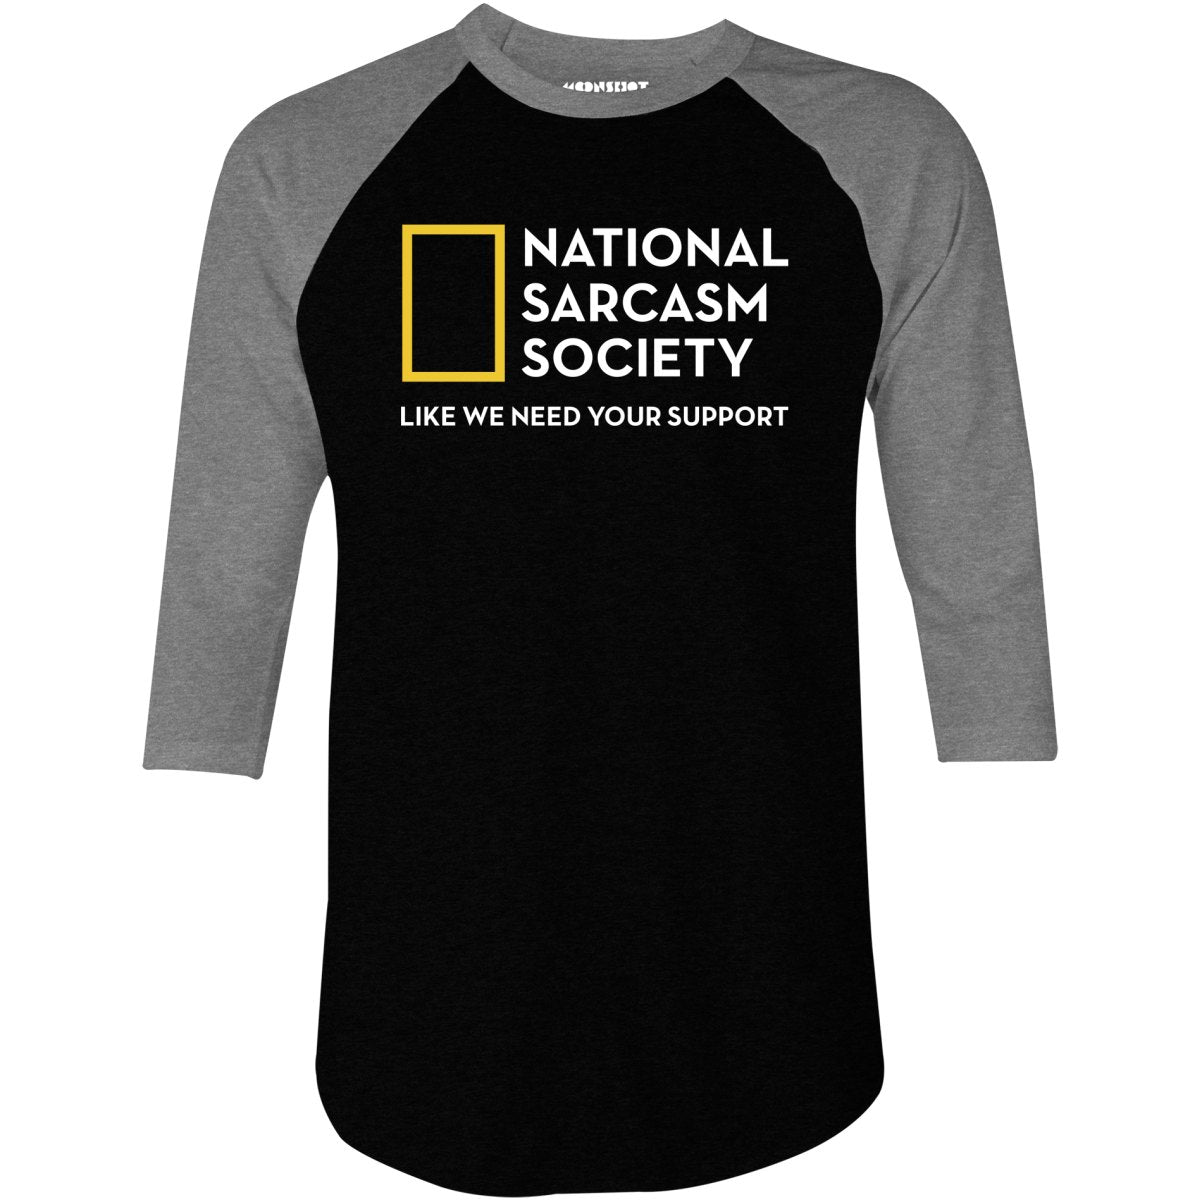 National Sarcasm Society - 3/4 Sleeve Raglan T-Shirt